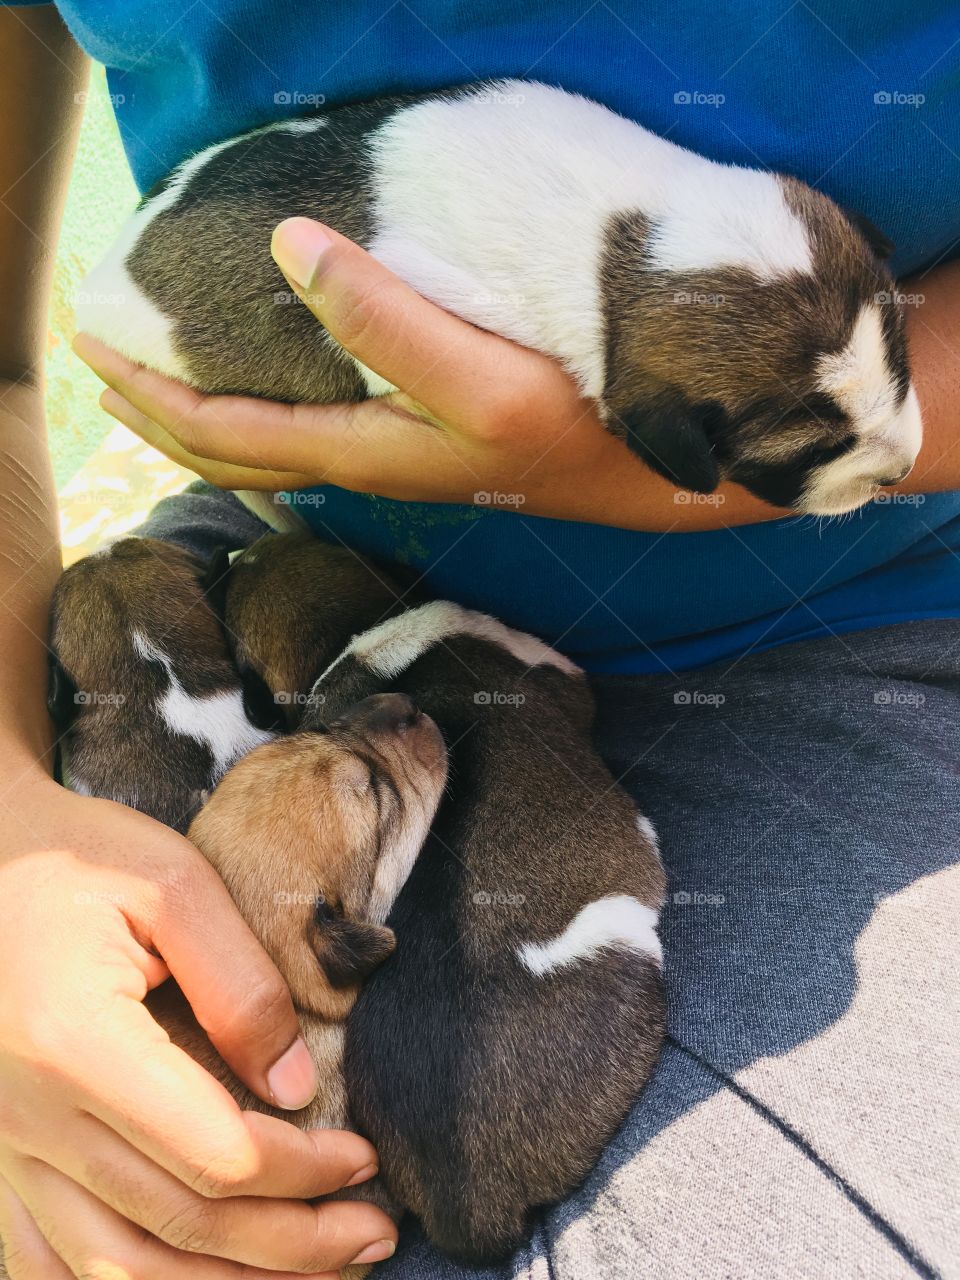 My Street dog gave birth to 4 puppy’s 